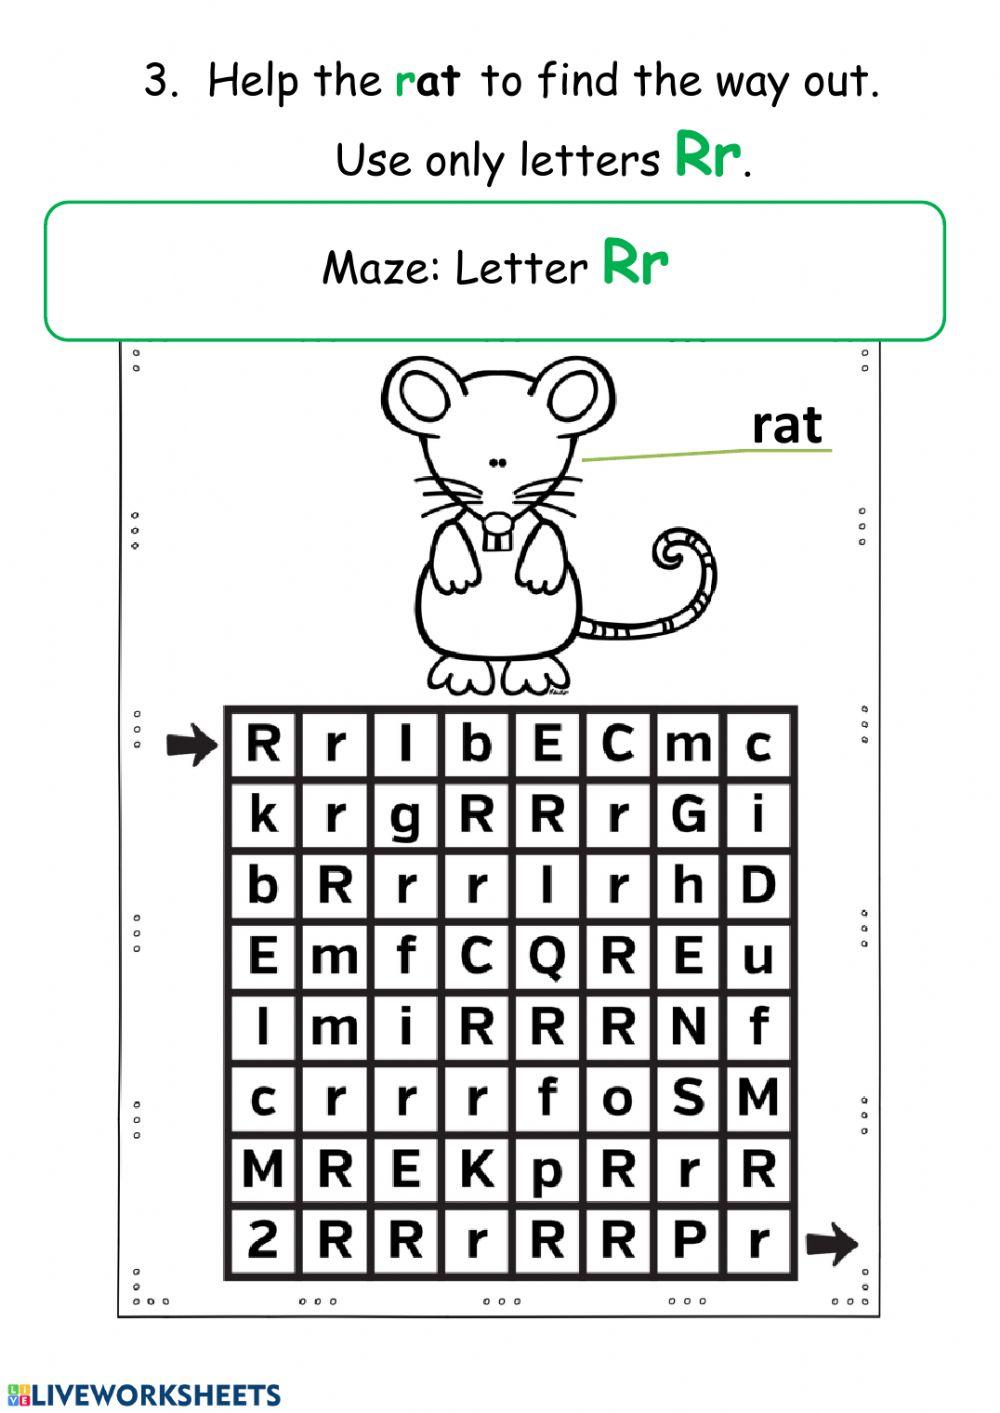 Letter Recognition Maze: Letter Rr